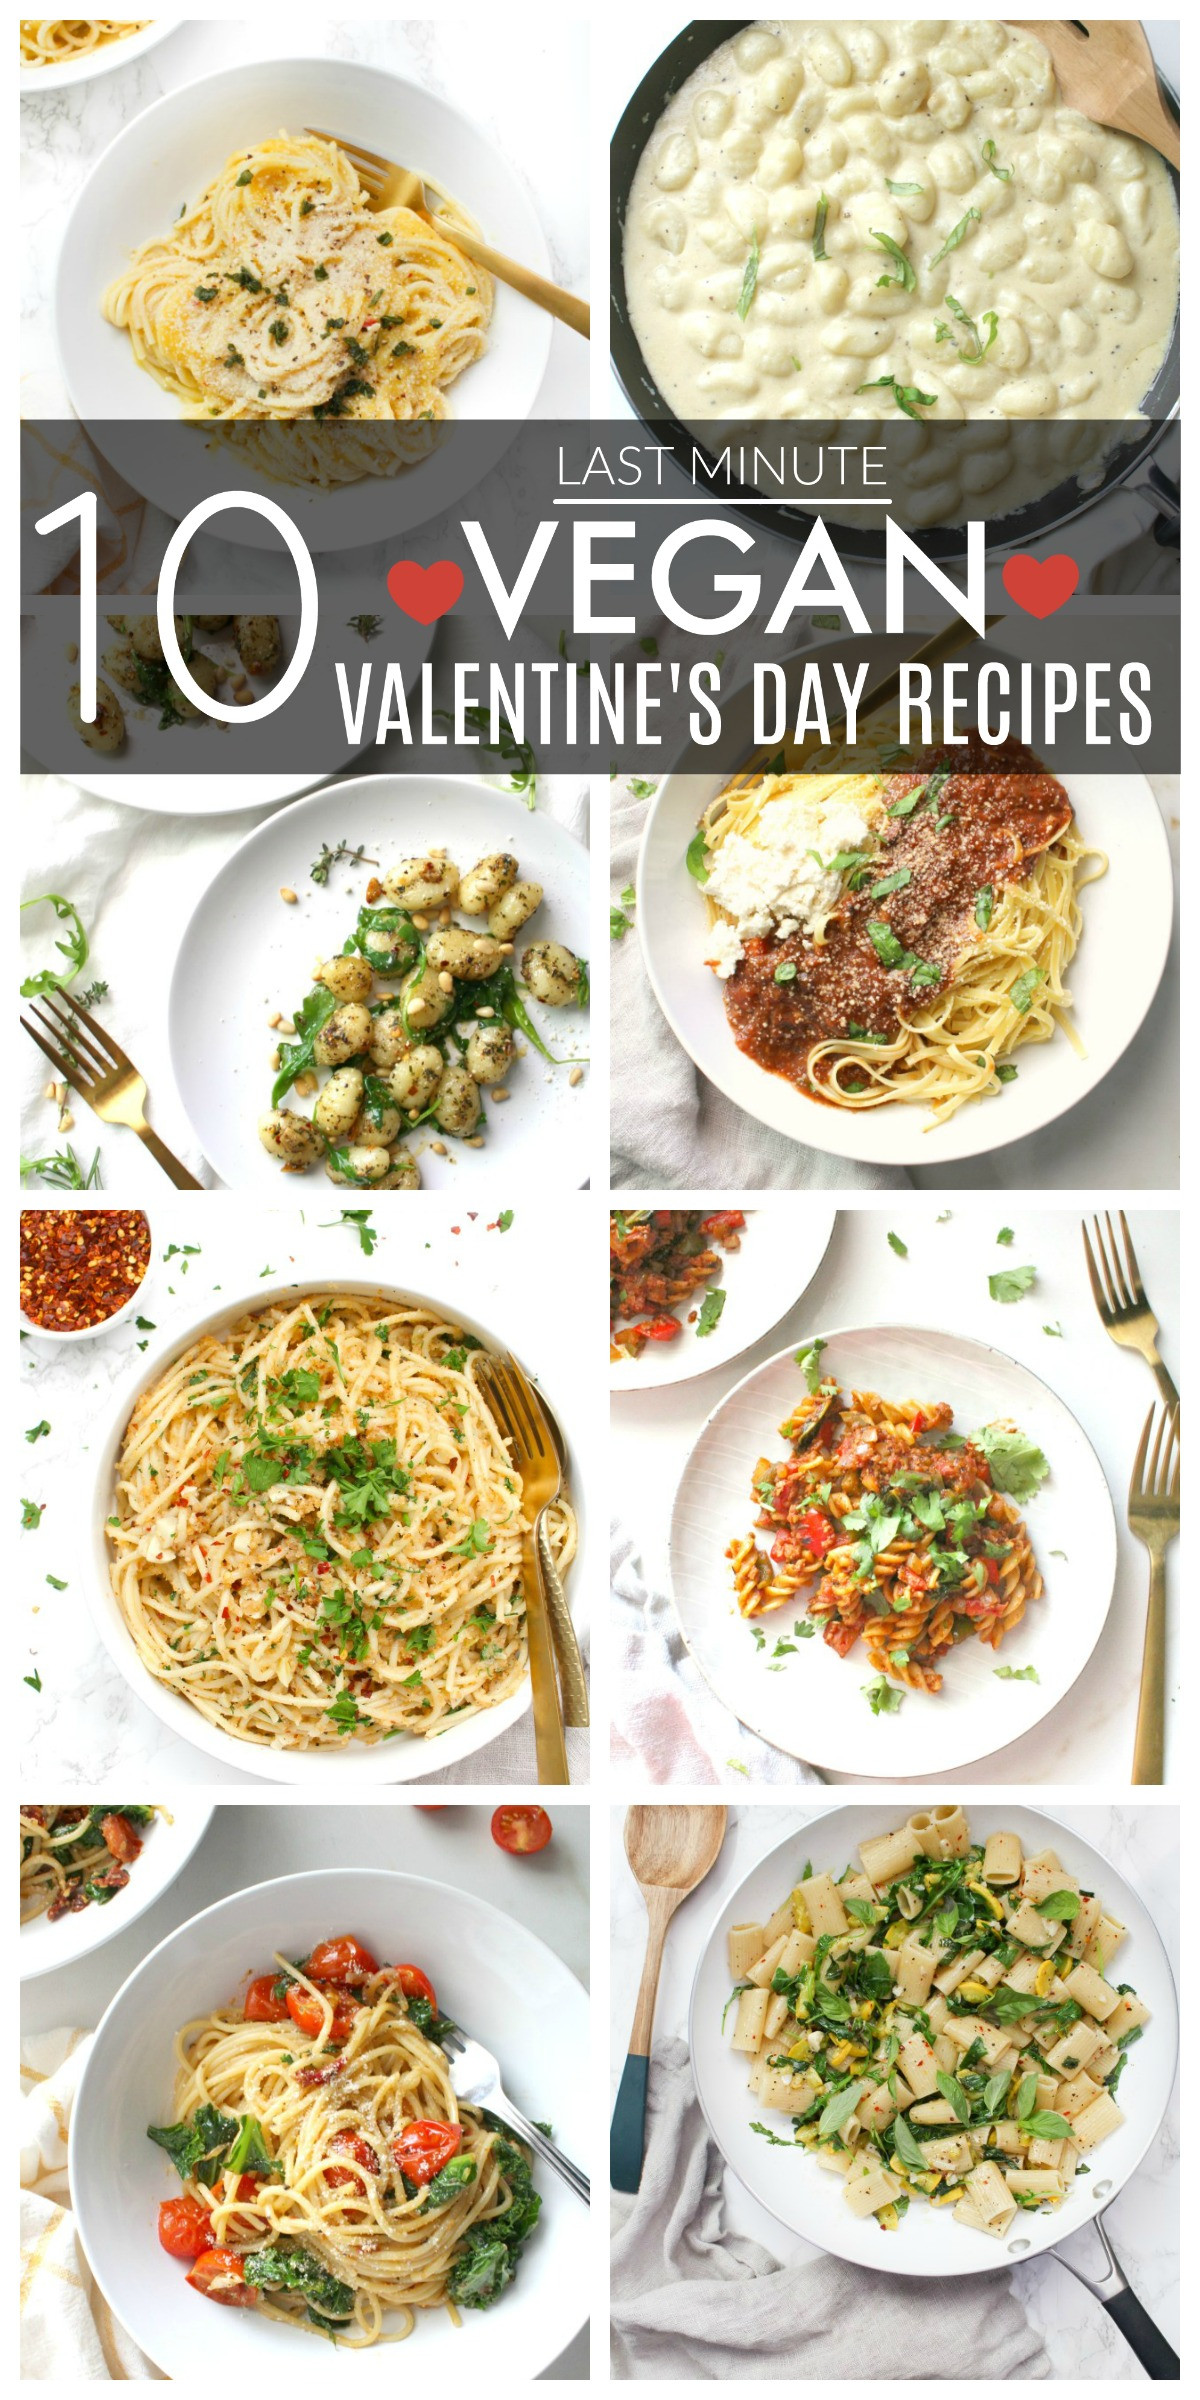 Vegetarian Valentines Recipes
 10 Last Minute Vegan Valentine s Day Recipes